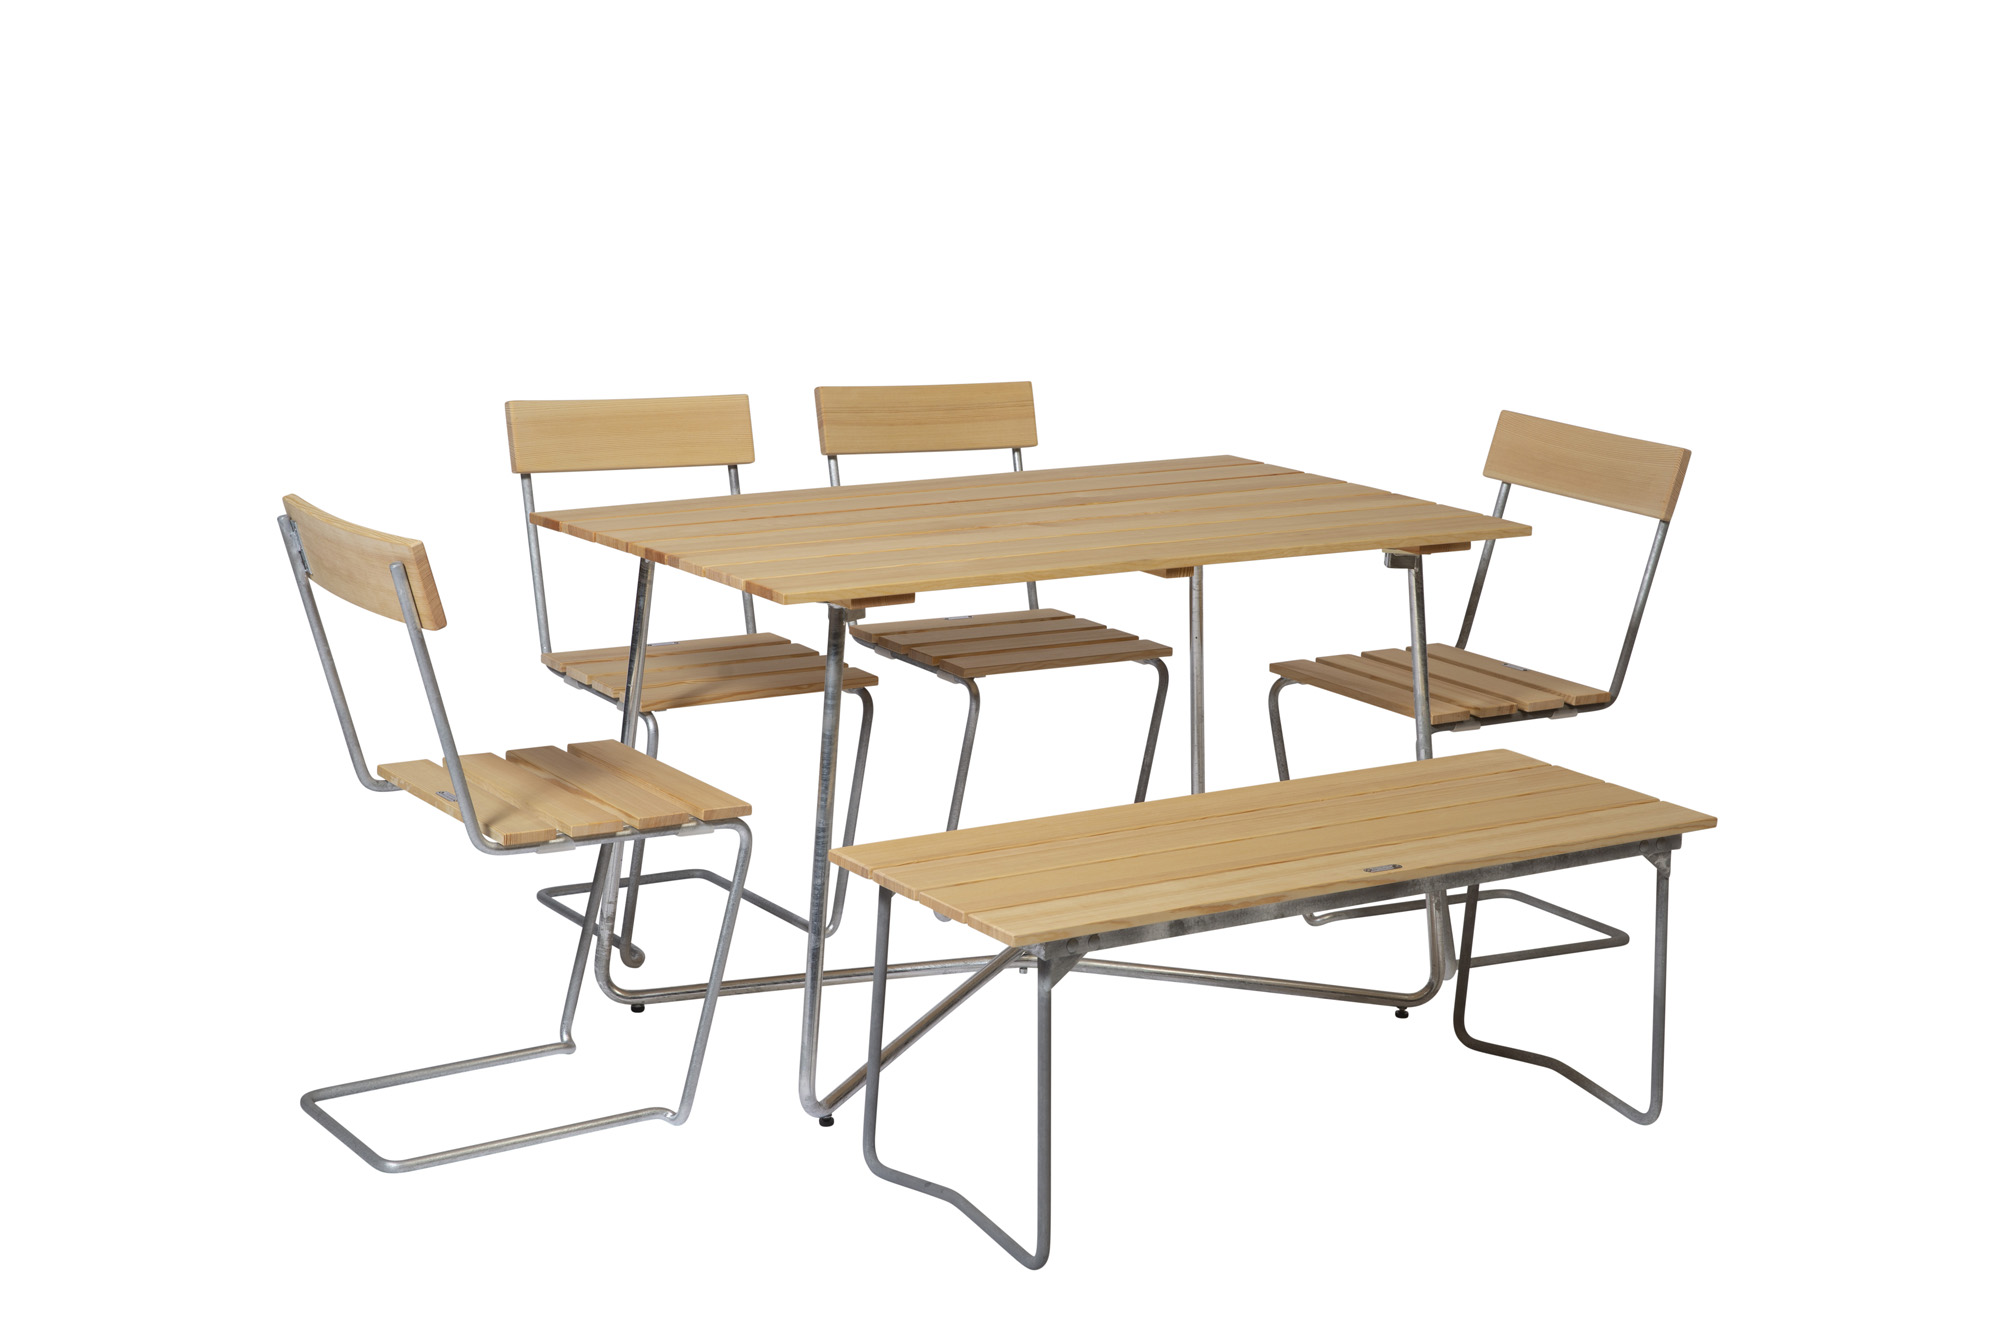 Grythyttan Stålmöbler B25 spisebordsæt Oljert furu/galvaniseret stål 4 stole, bænk 110 cm & bord 120 x 70 cm